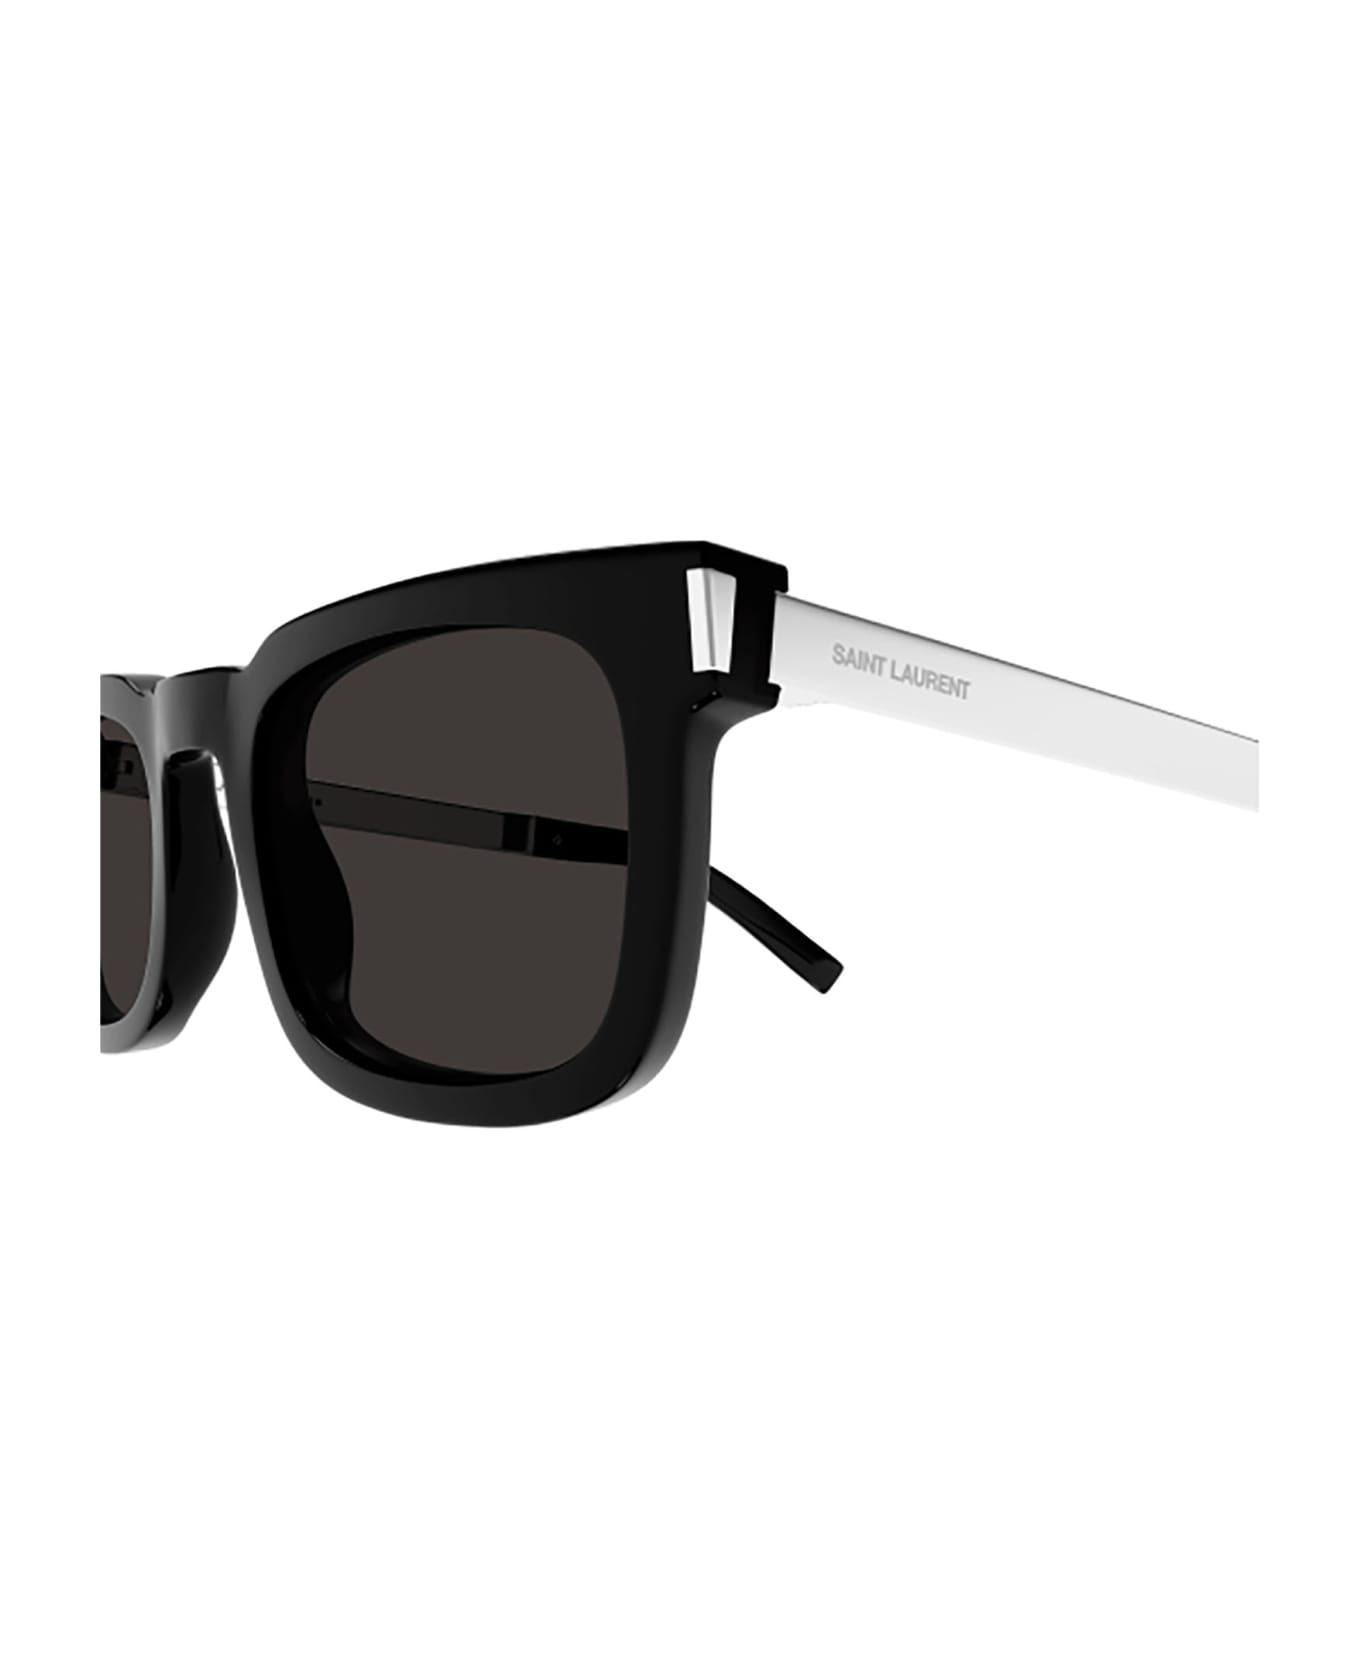 Saint Laurent Eyewear Sl 581 Sunglasses - 001 black silver black